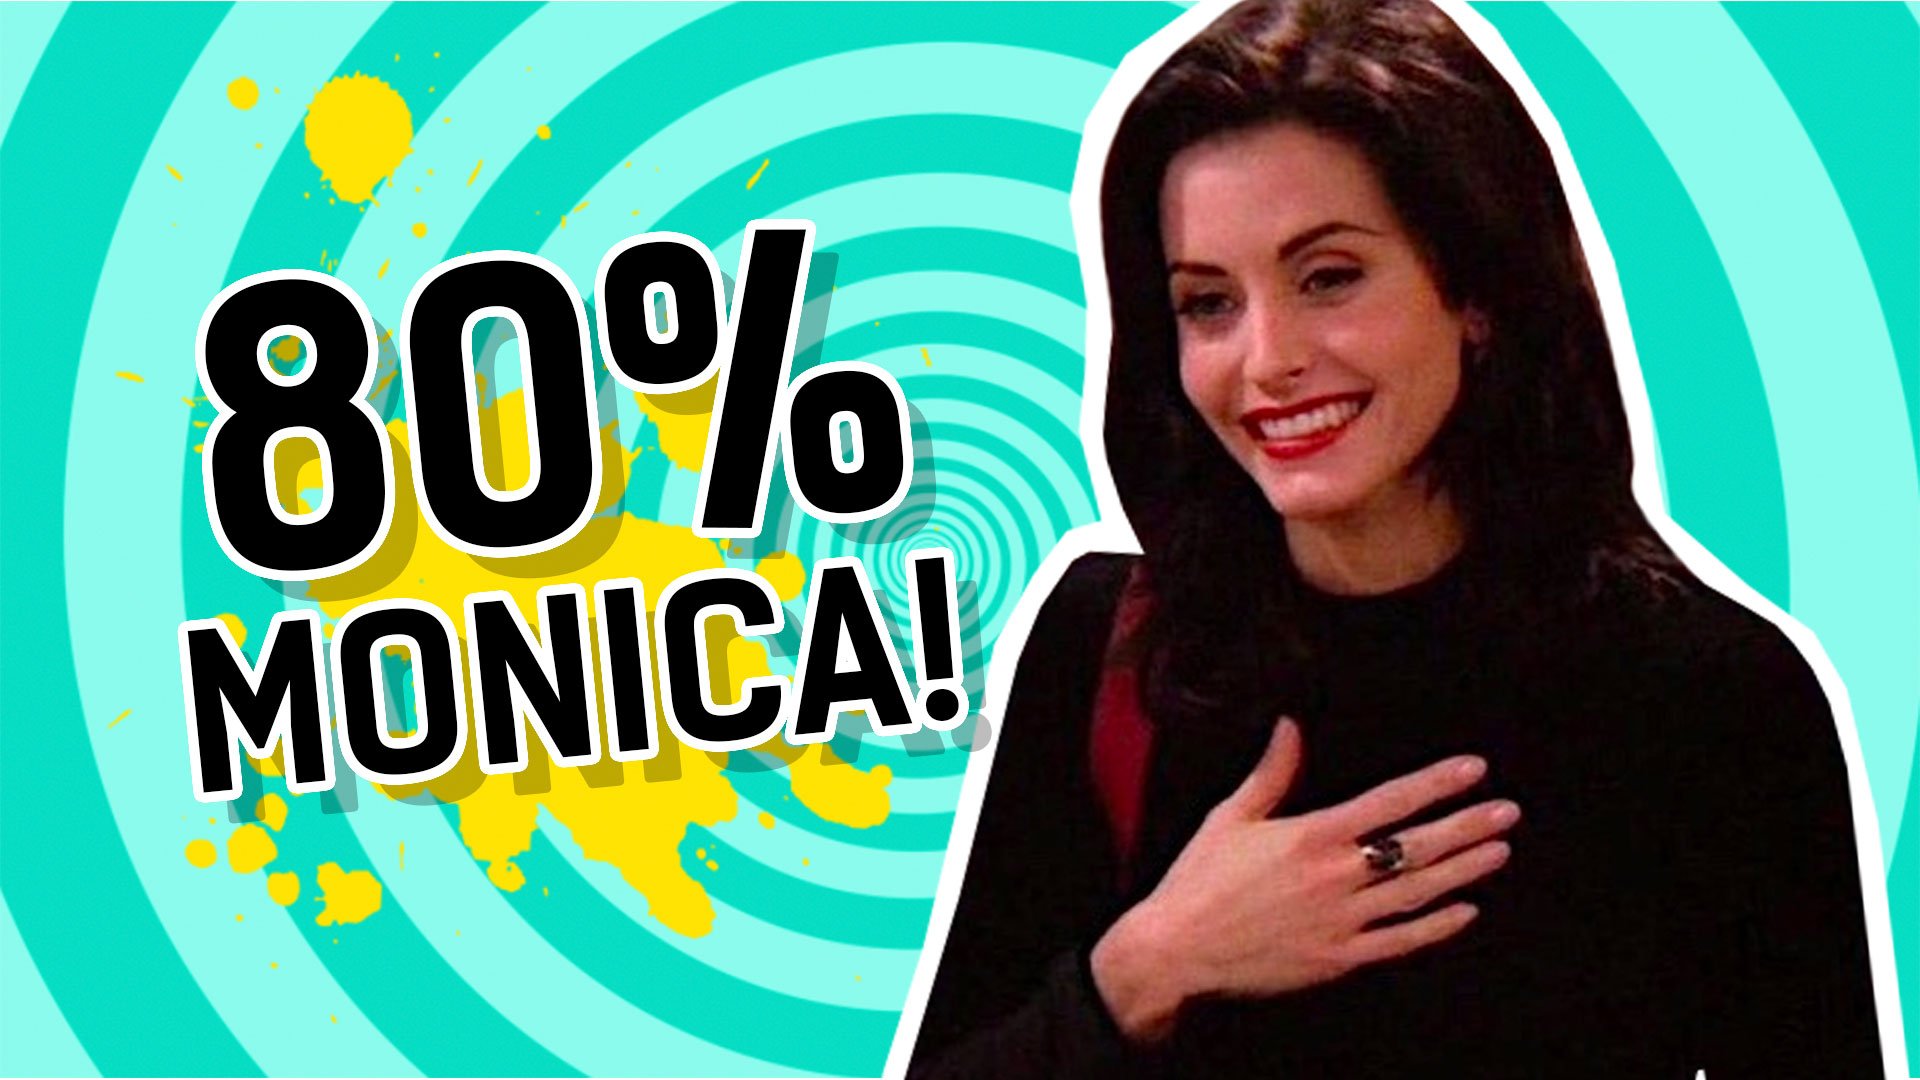 Result: 80% Monica